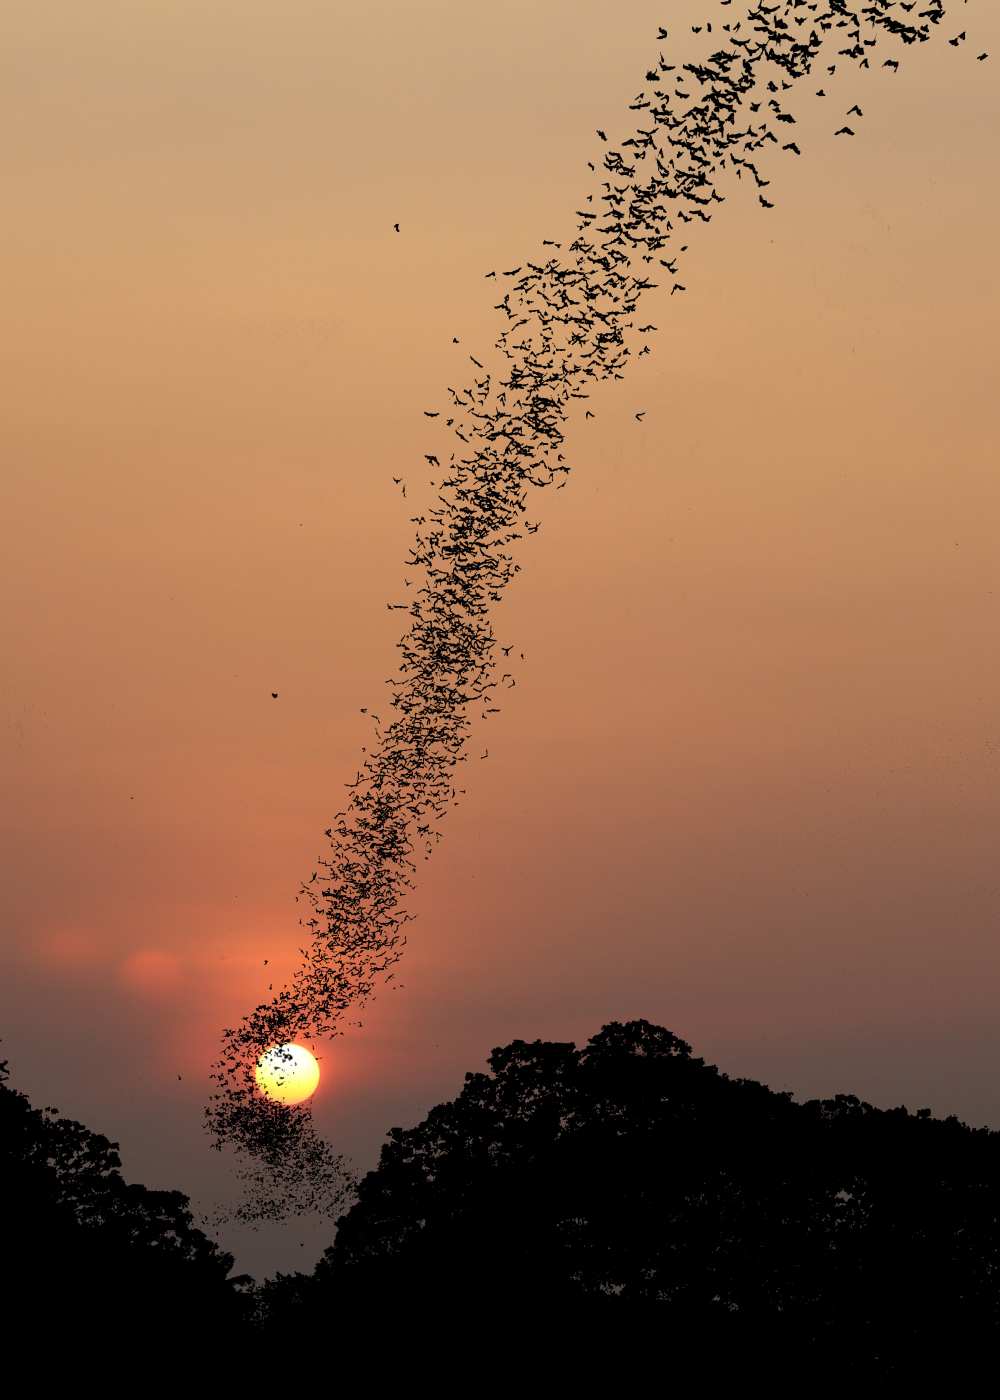 Bat swarm at sunset od Jean De Spiegeleer